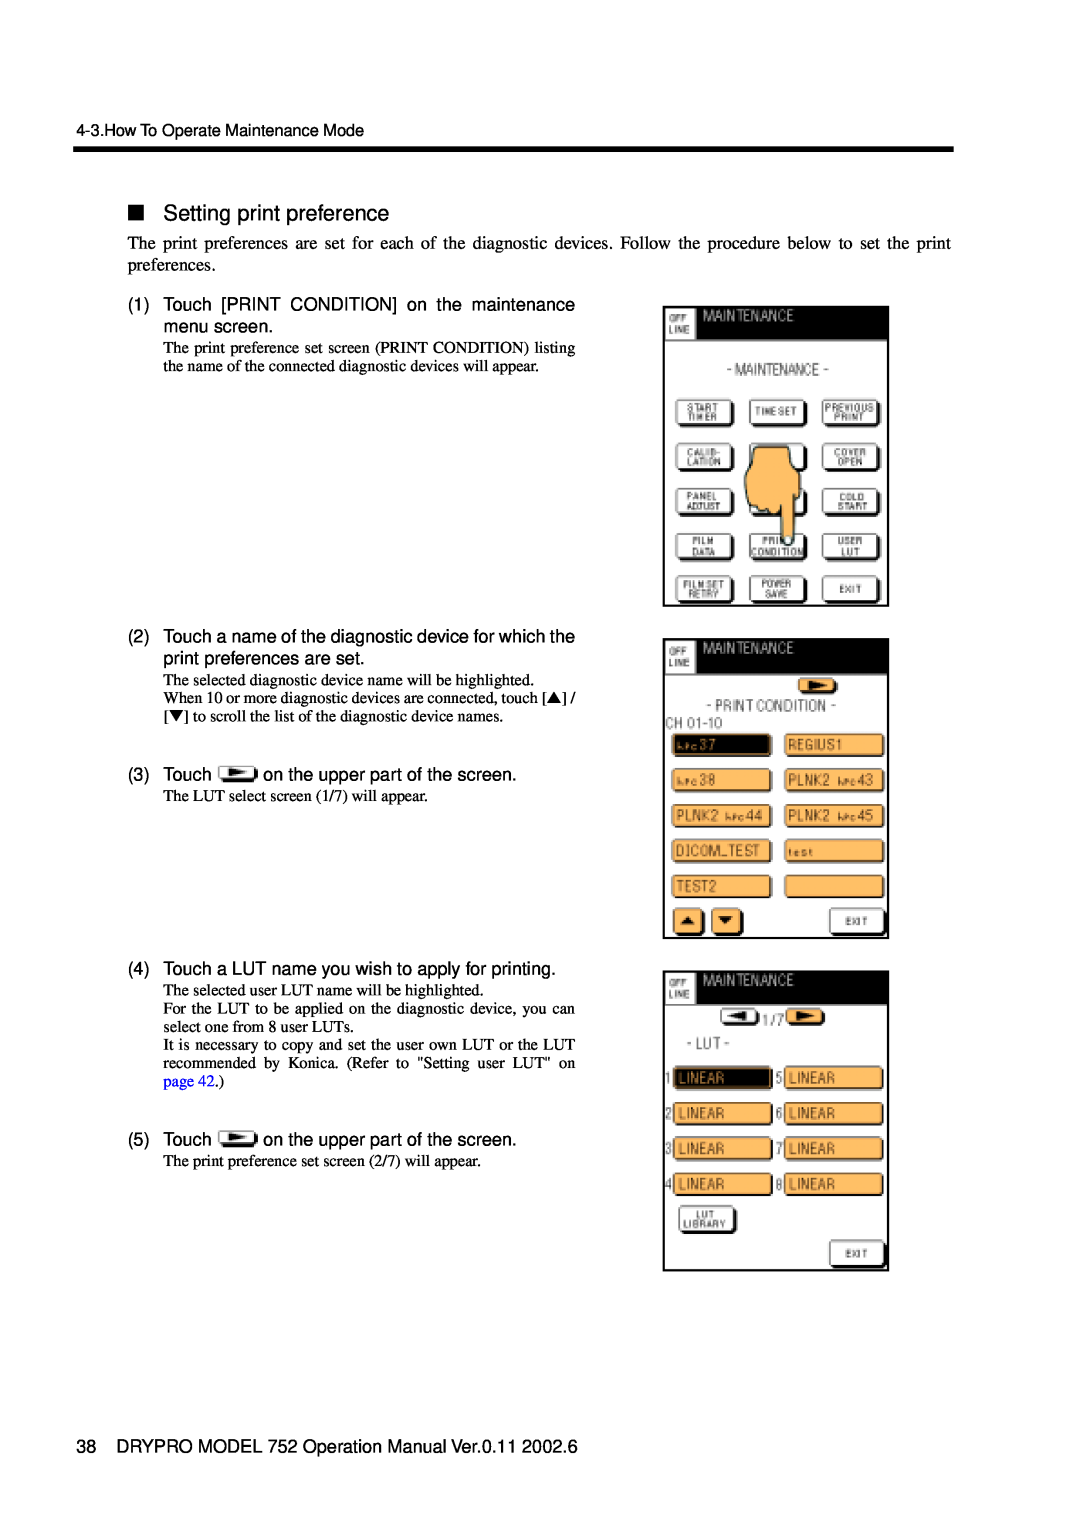 Konica Minolta 752 operation manual Setting print preference 